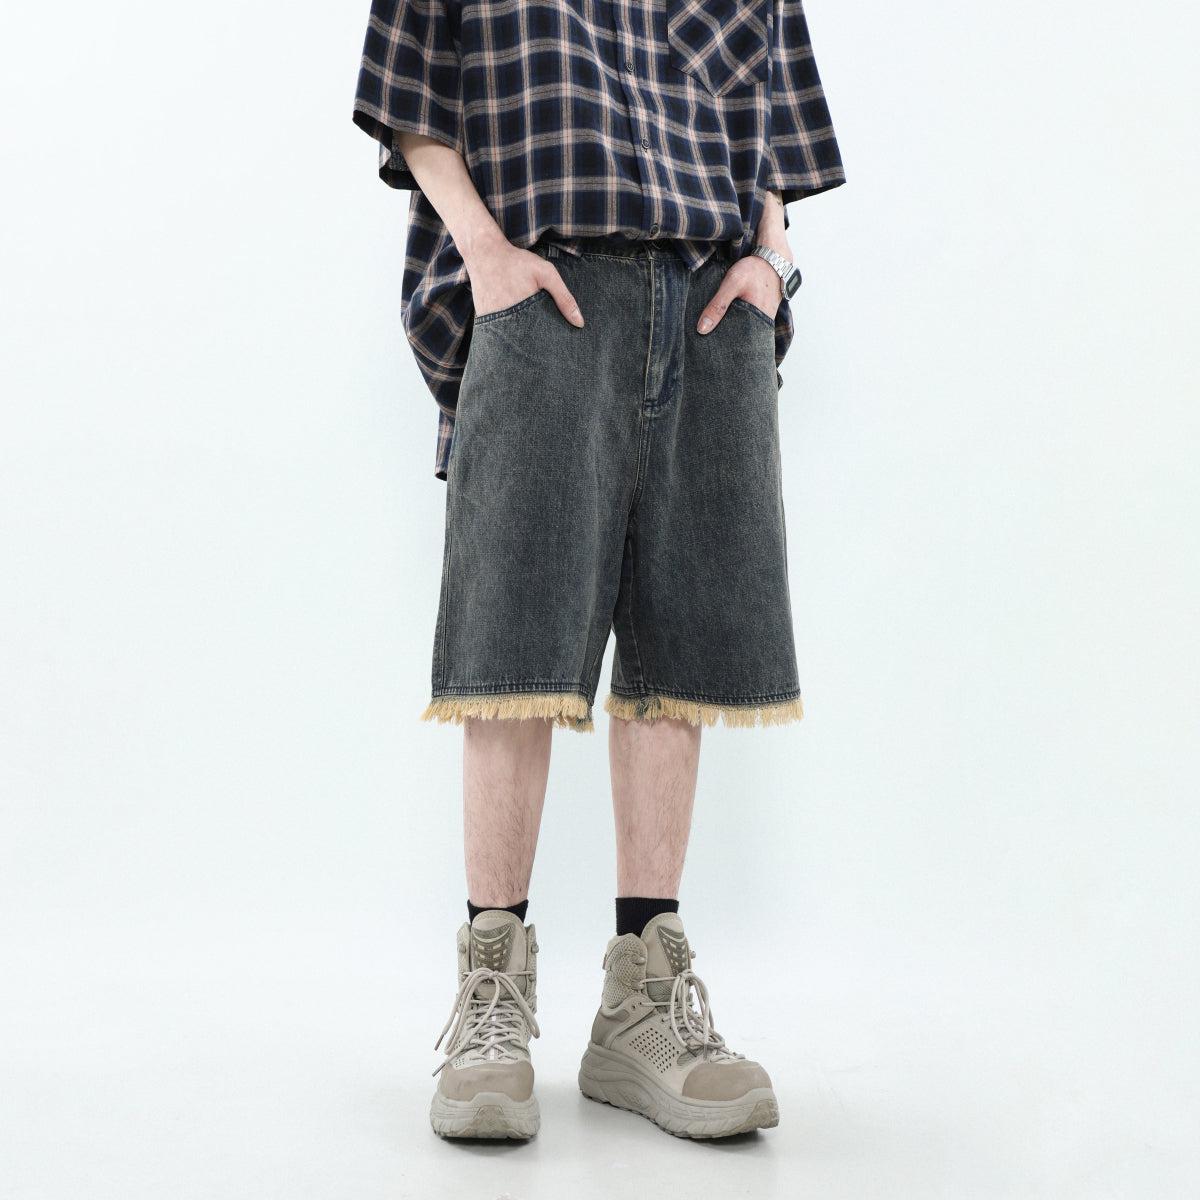 Mr Nearly Asymmetric Pocket Tassel Hem Denim Shorts Korean Street Fashion Shorts By Mr Nearly Shop Online at OH Vault